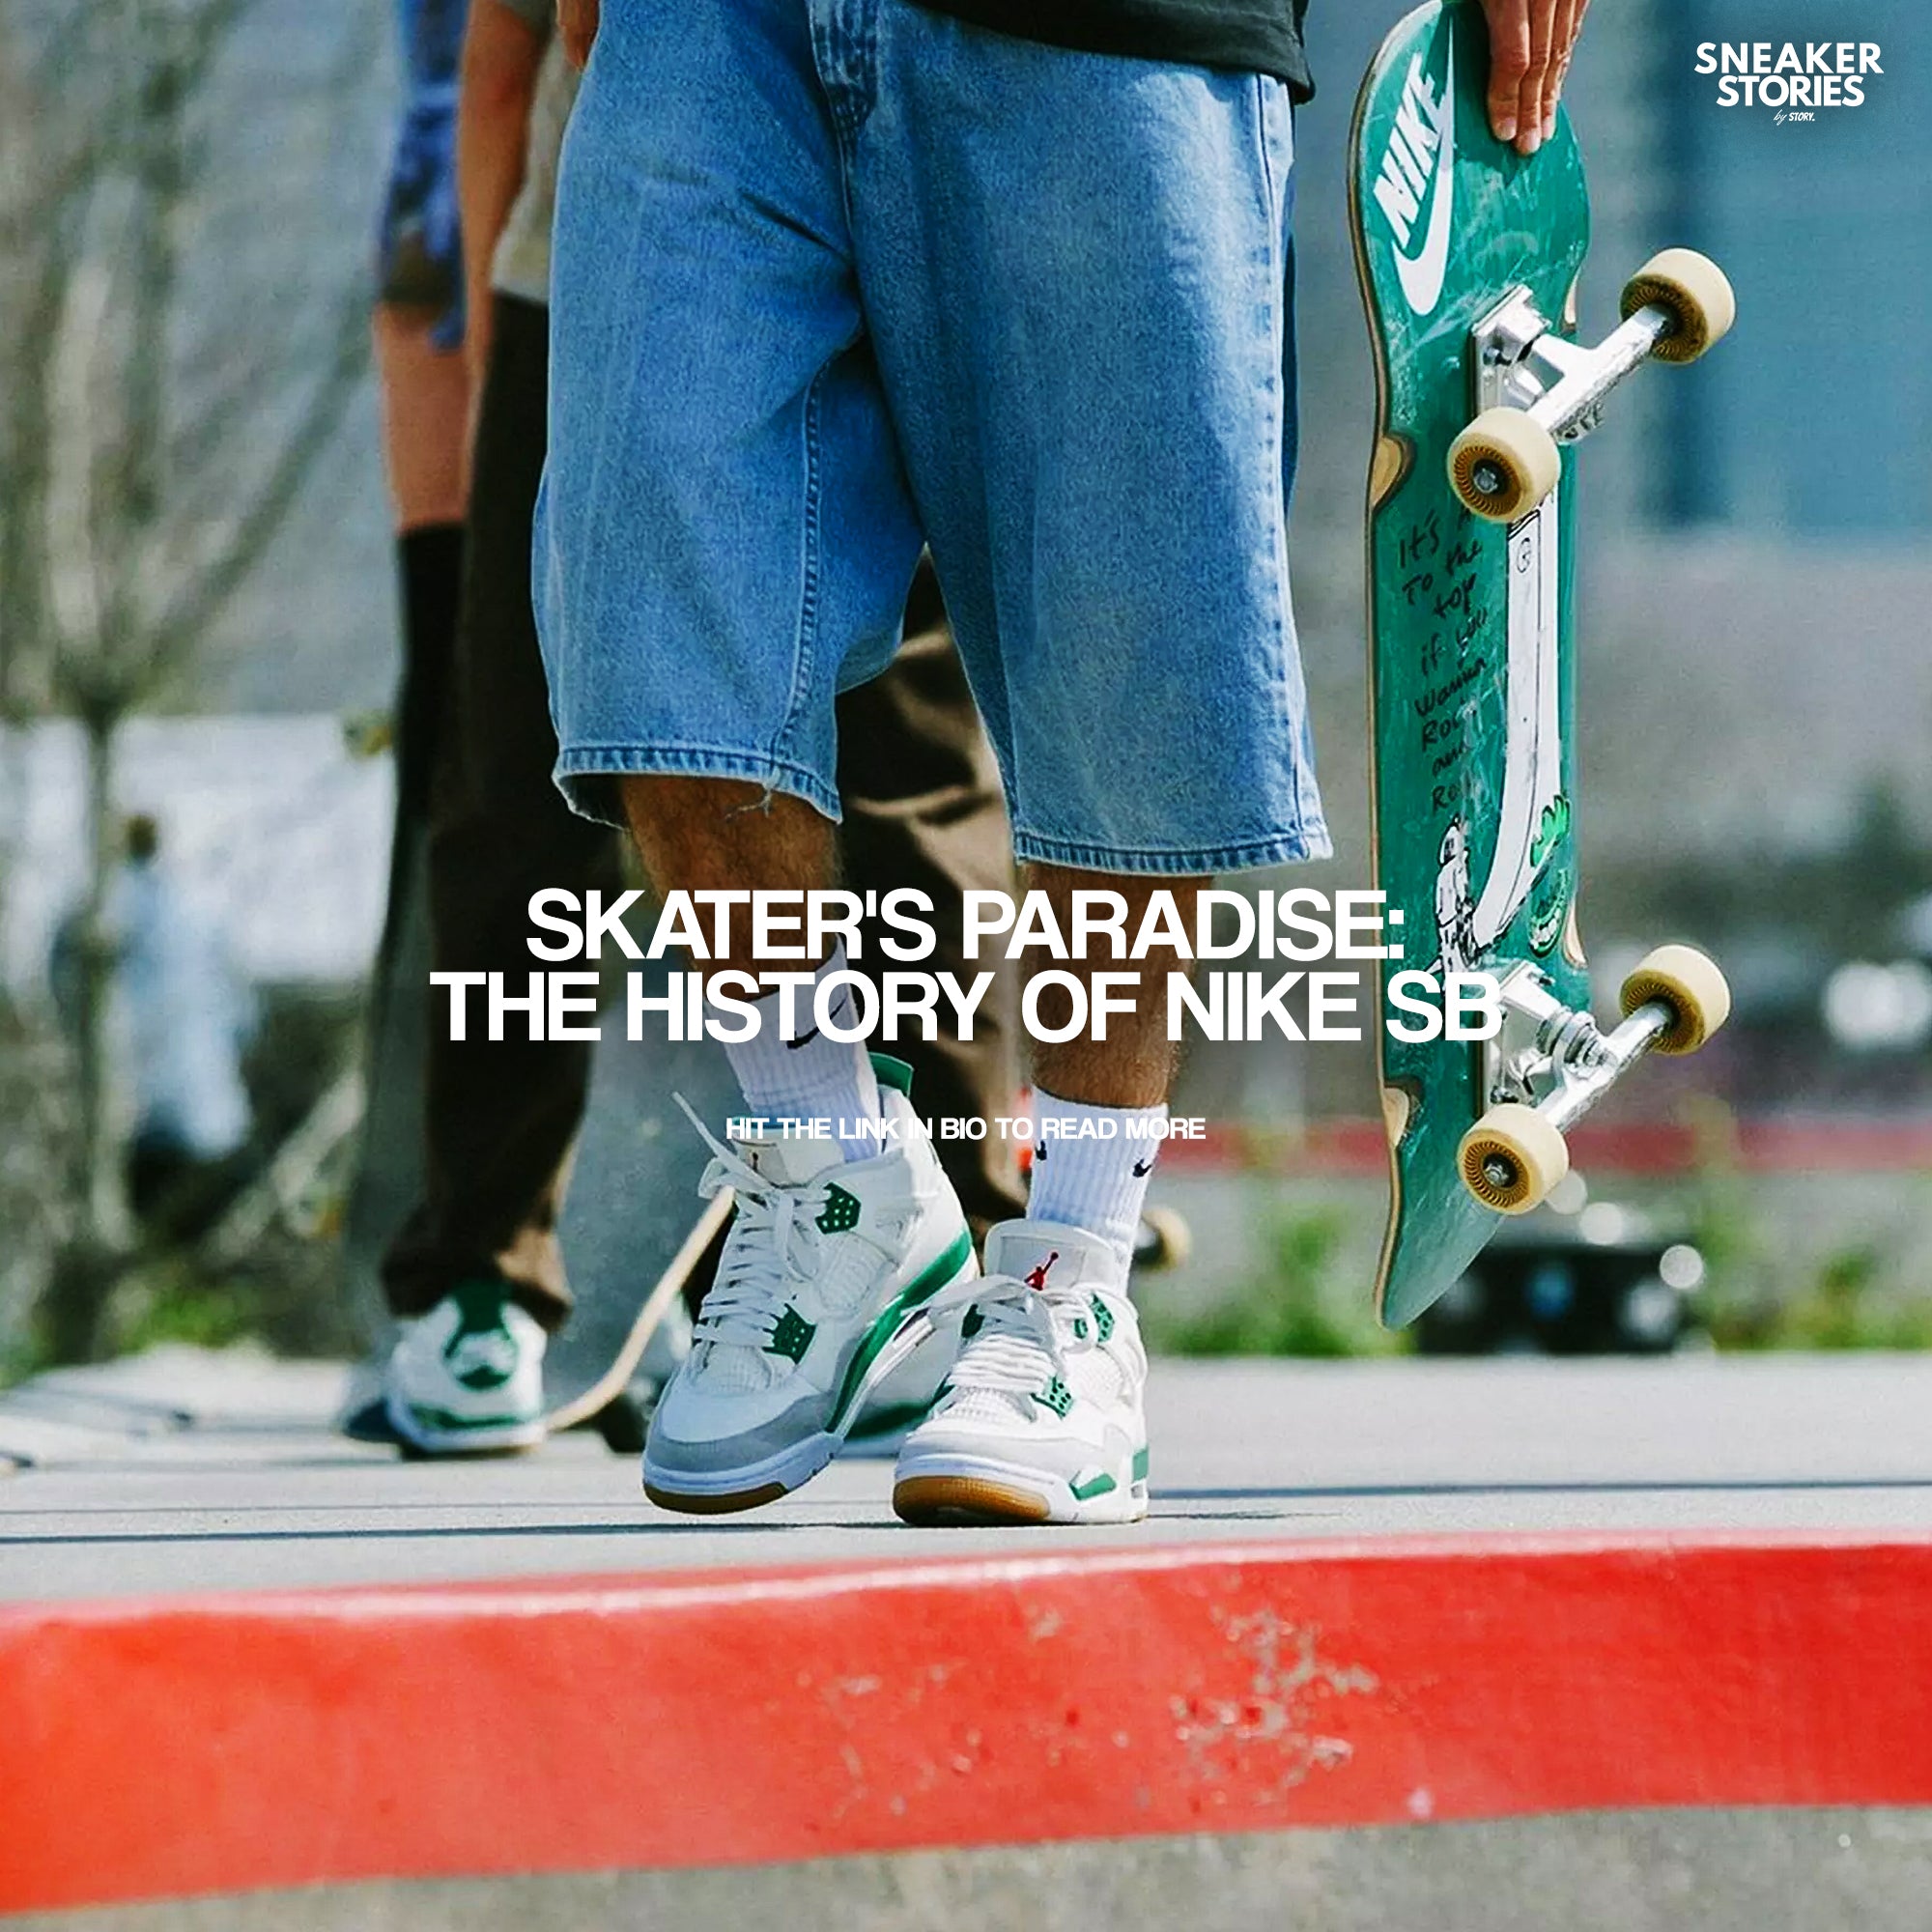 Skater's Paradise: The history of Nike SB